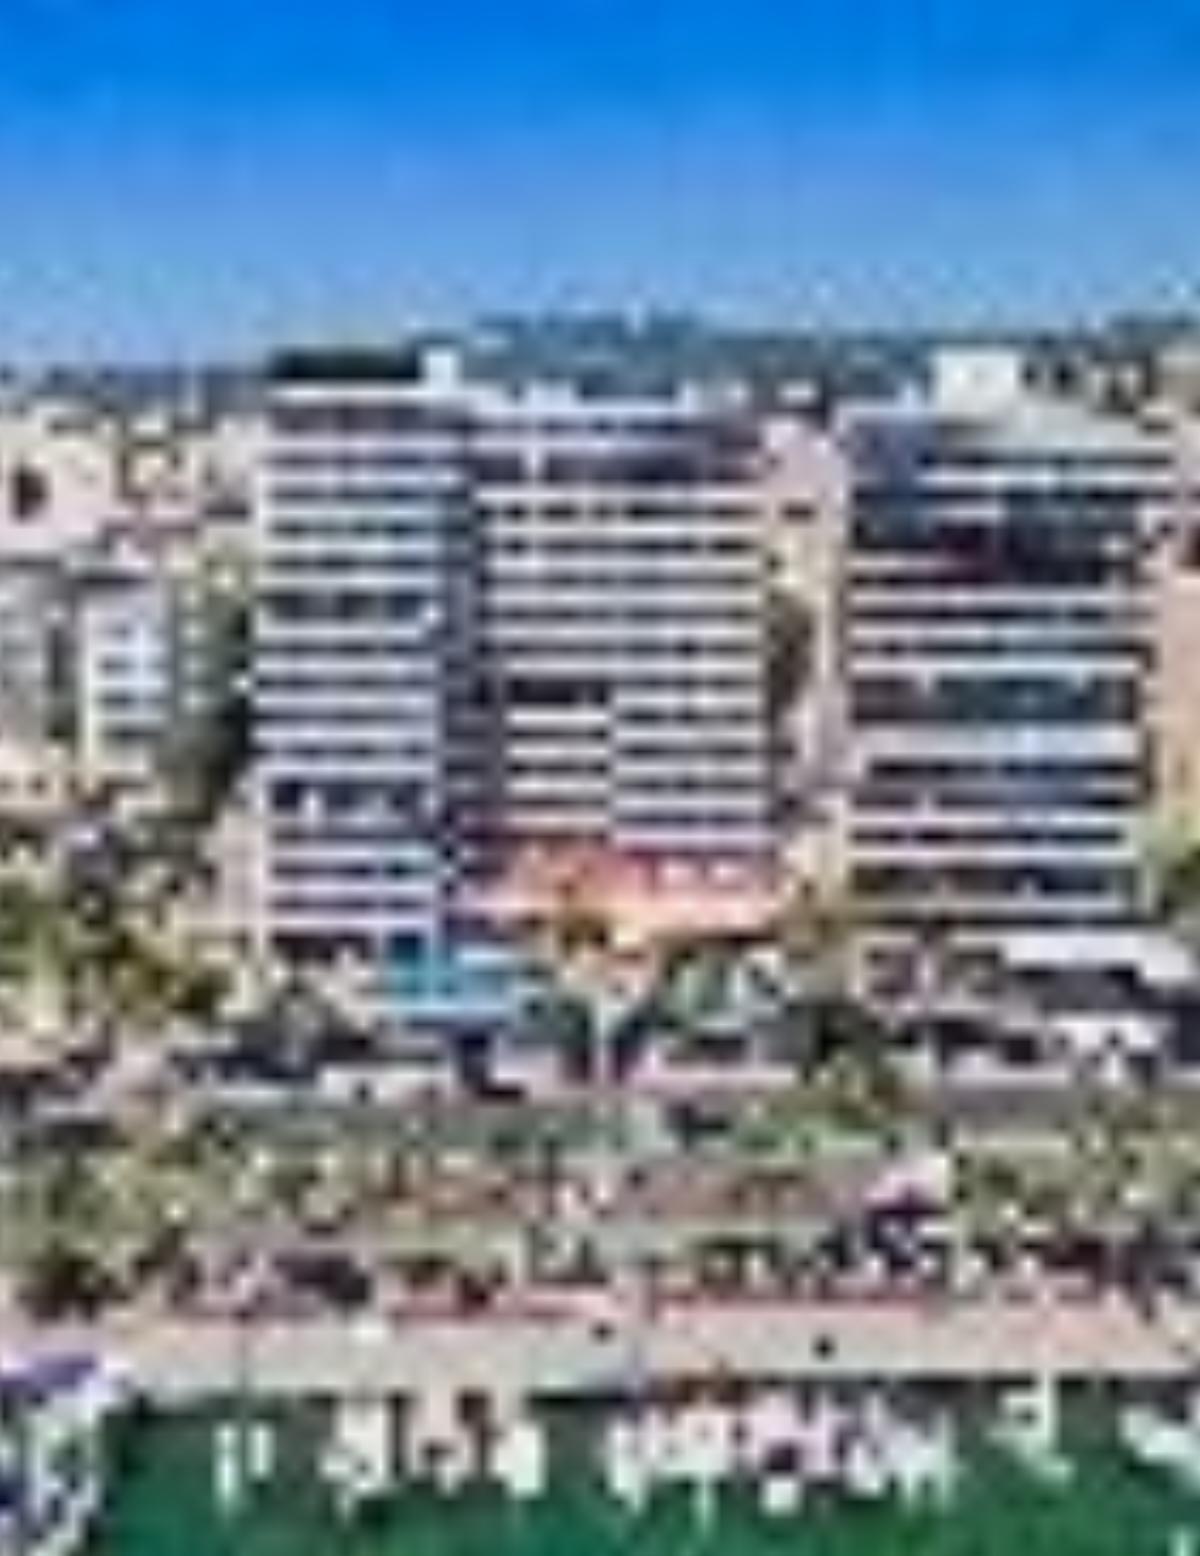 TRYP Palma Bellver Hotel Hotel Majorca Spain